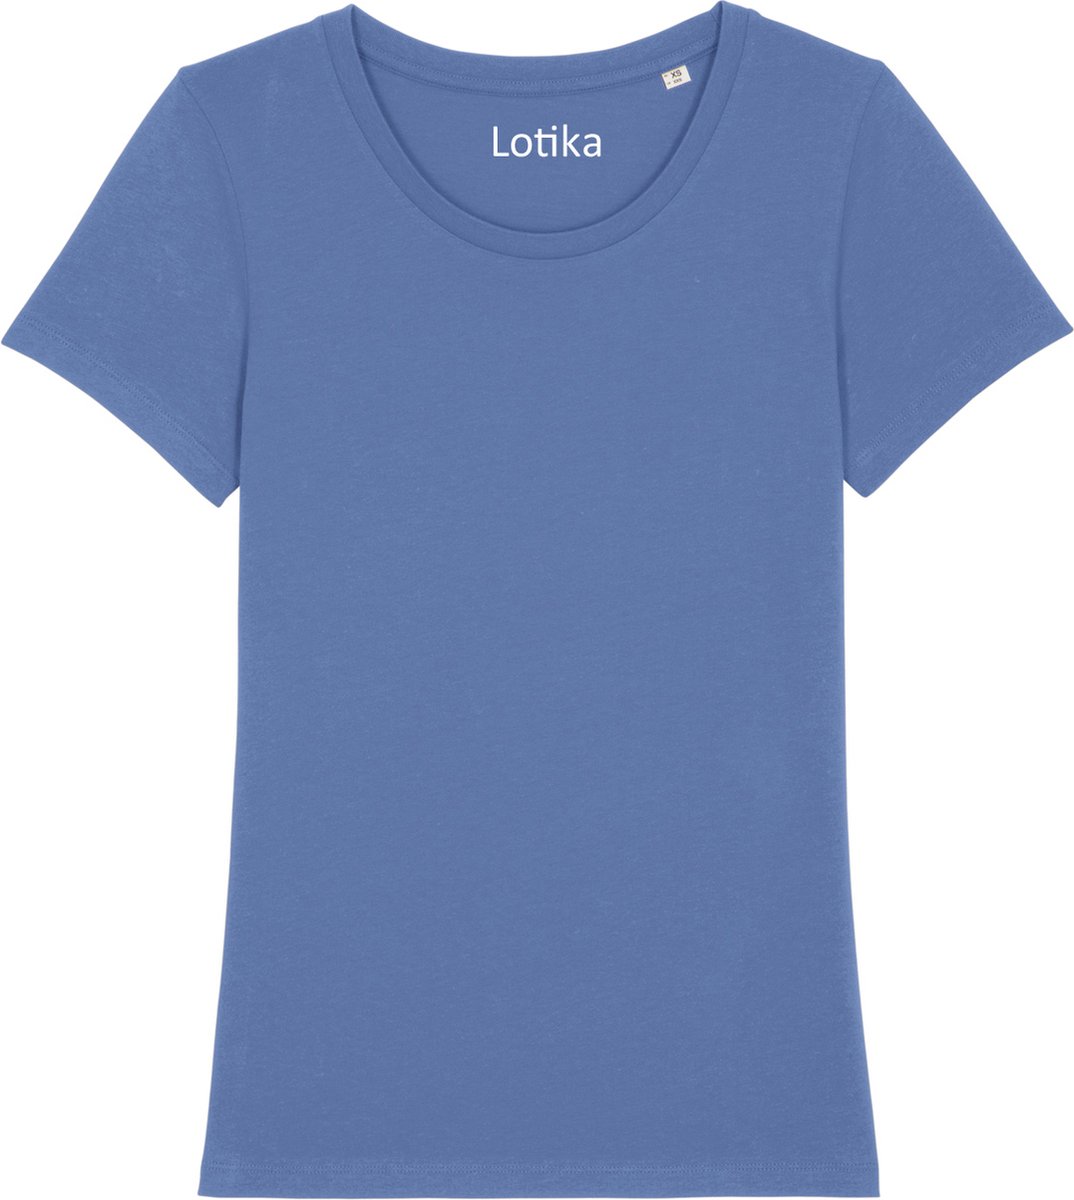 Lotika - Yara T-shirt dames biologisch katoen - bright blue